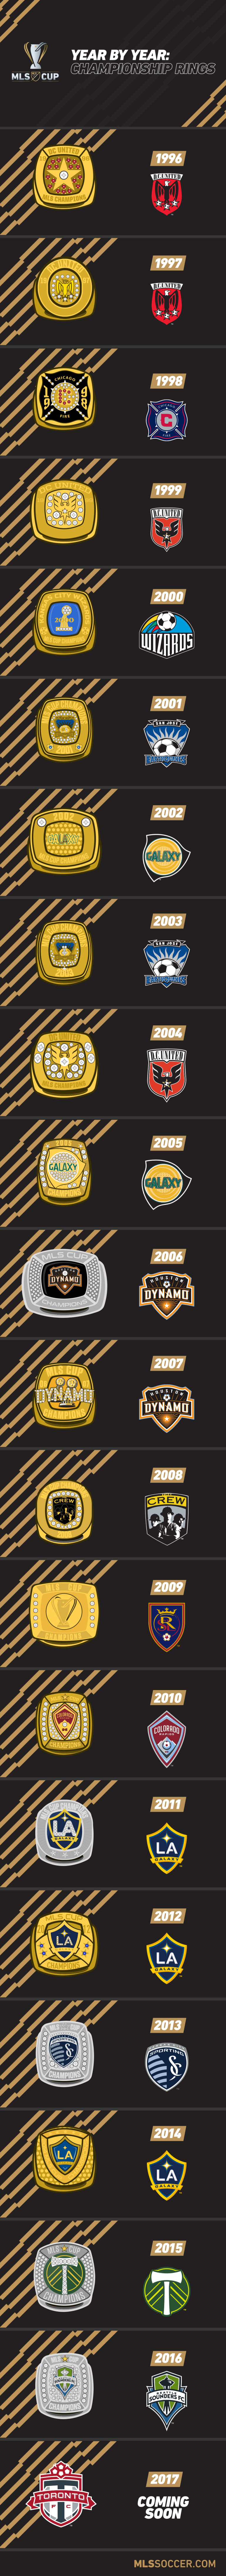 MLS Cup championship rings: a visual history -